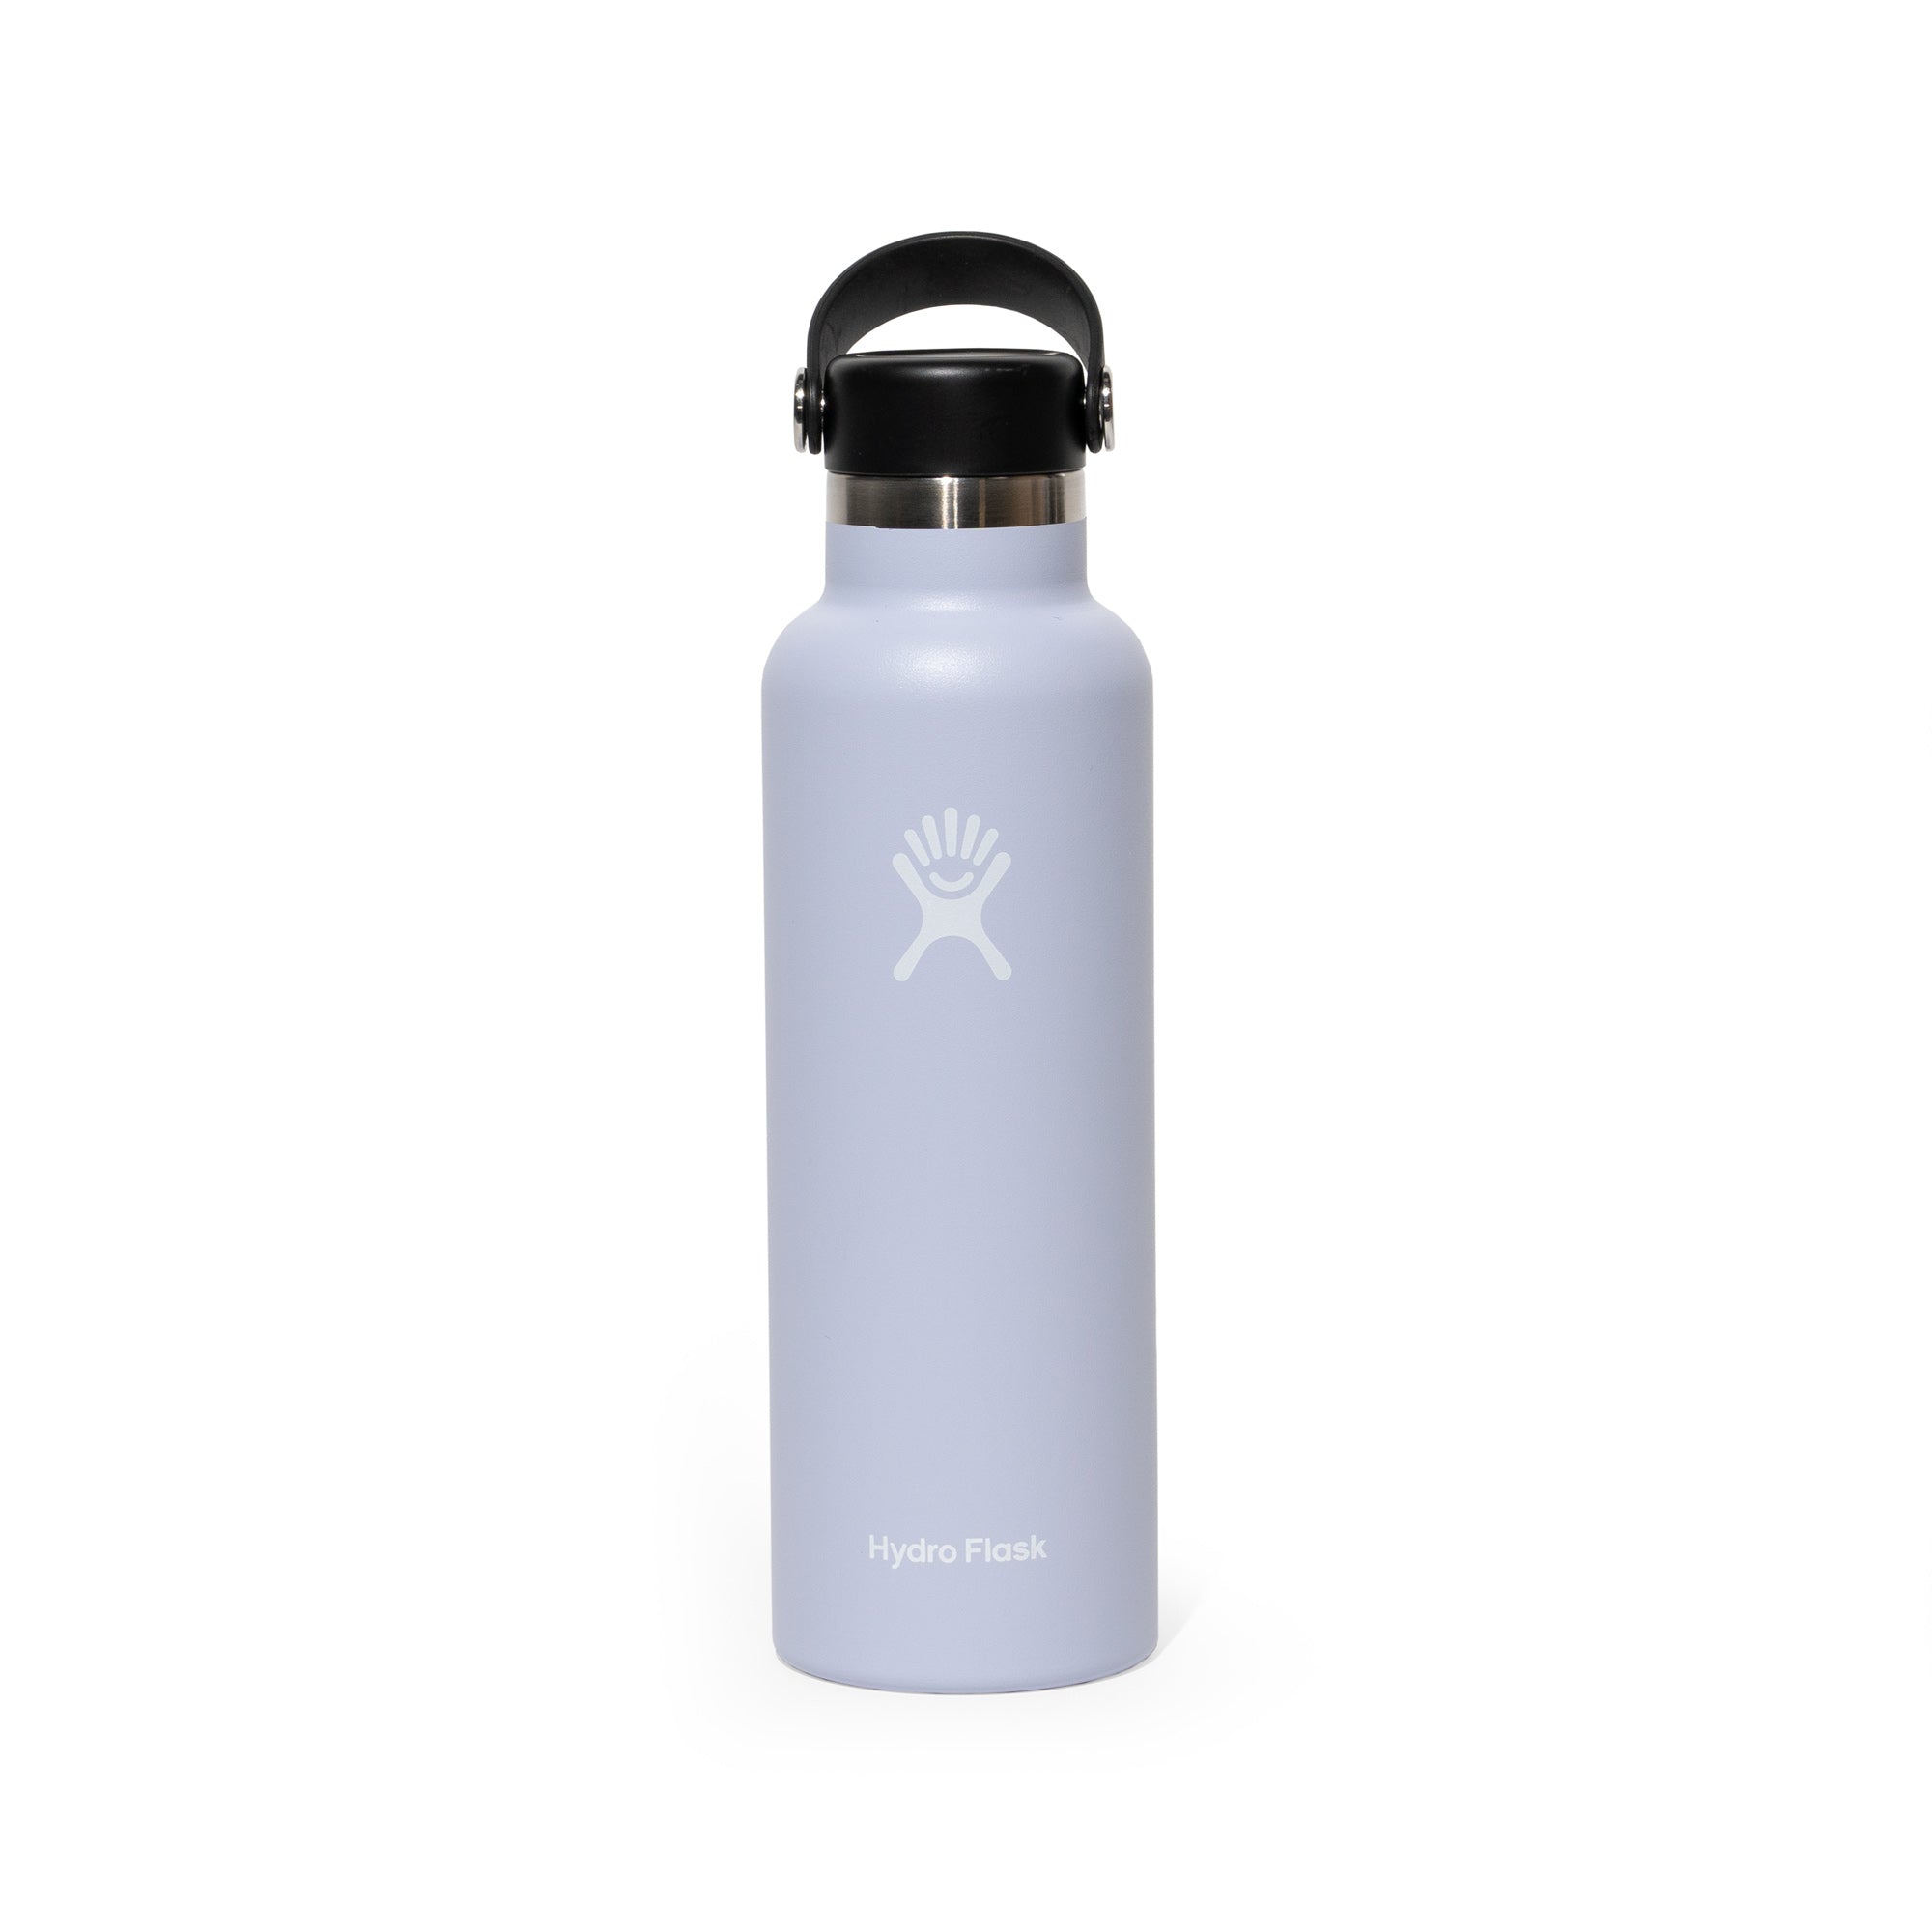  Hydro Flask Water Bottle - Stainless Steel & Vacuum